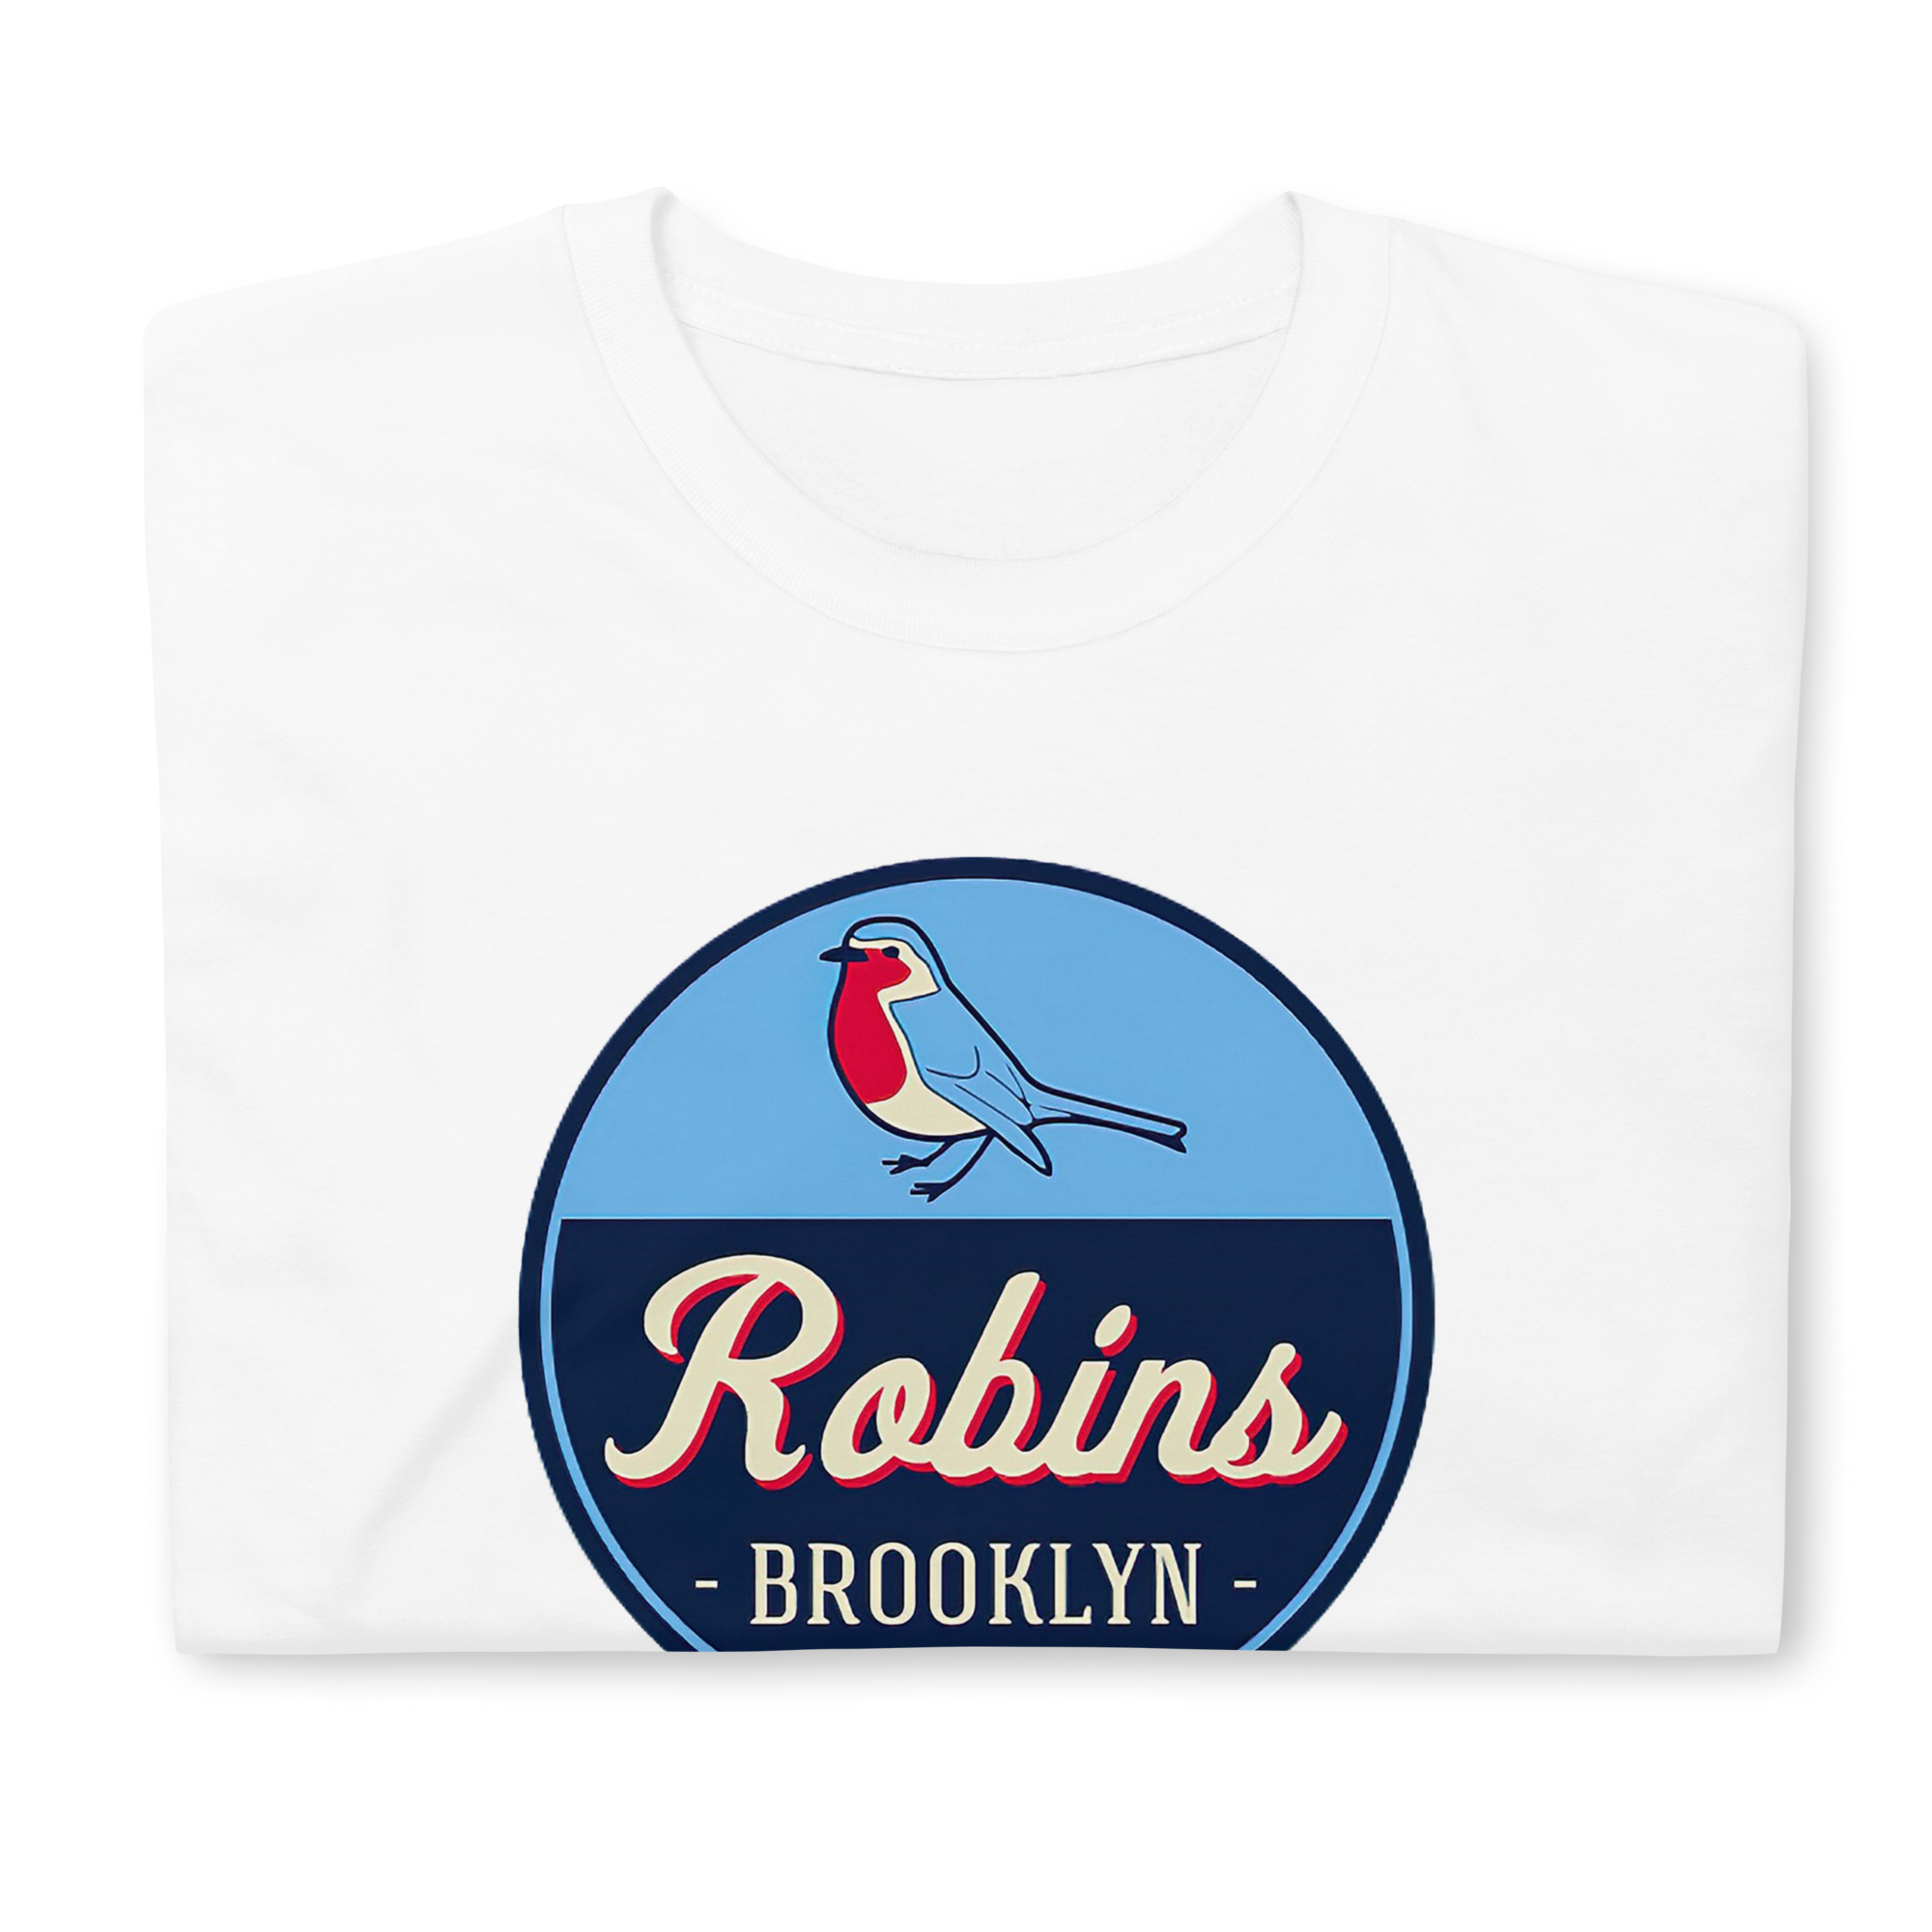 Brooklyn Robins Baseball Apparel Store